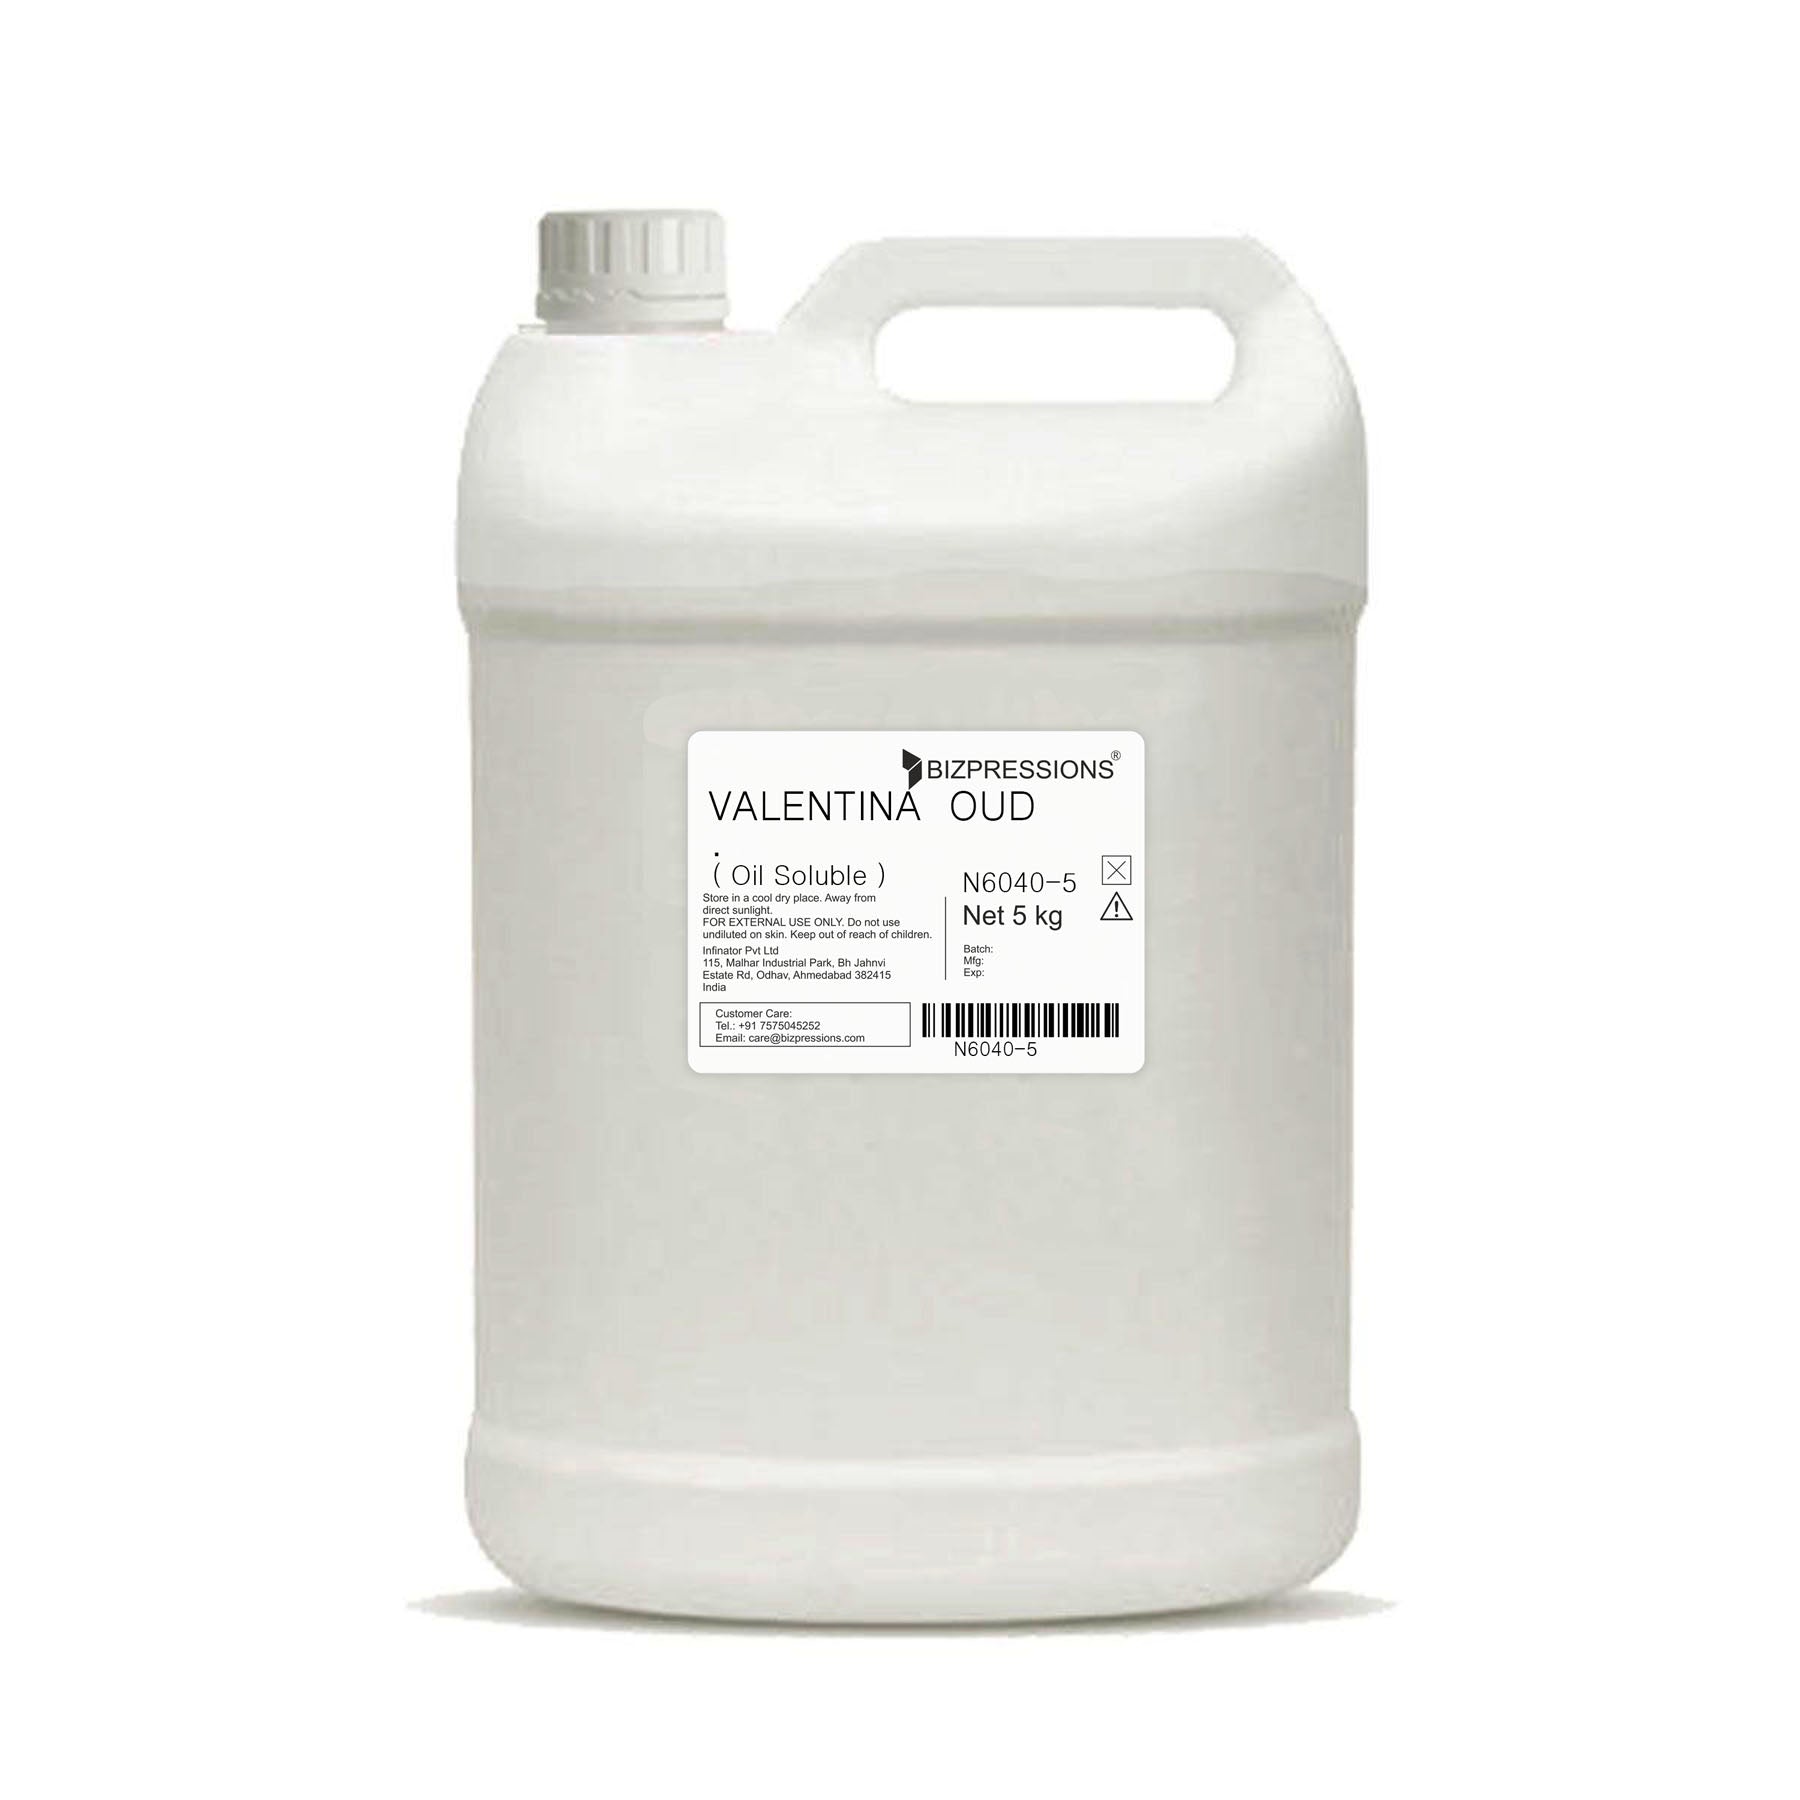 VALENTINA OUD - Fragrance ( Oil Soluble ) - 5 kg